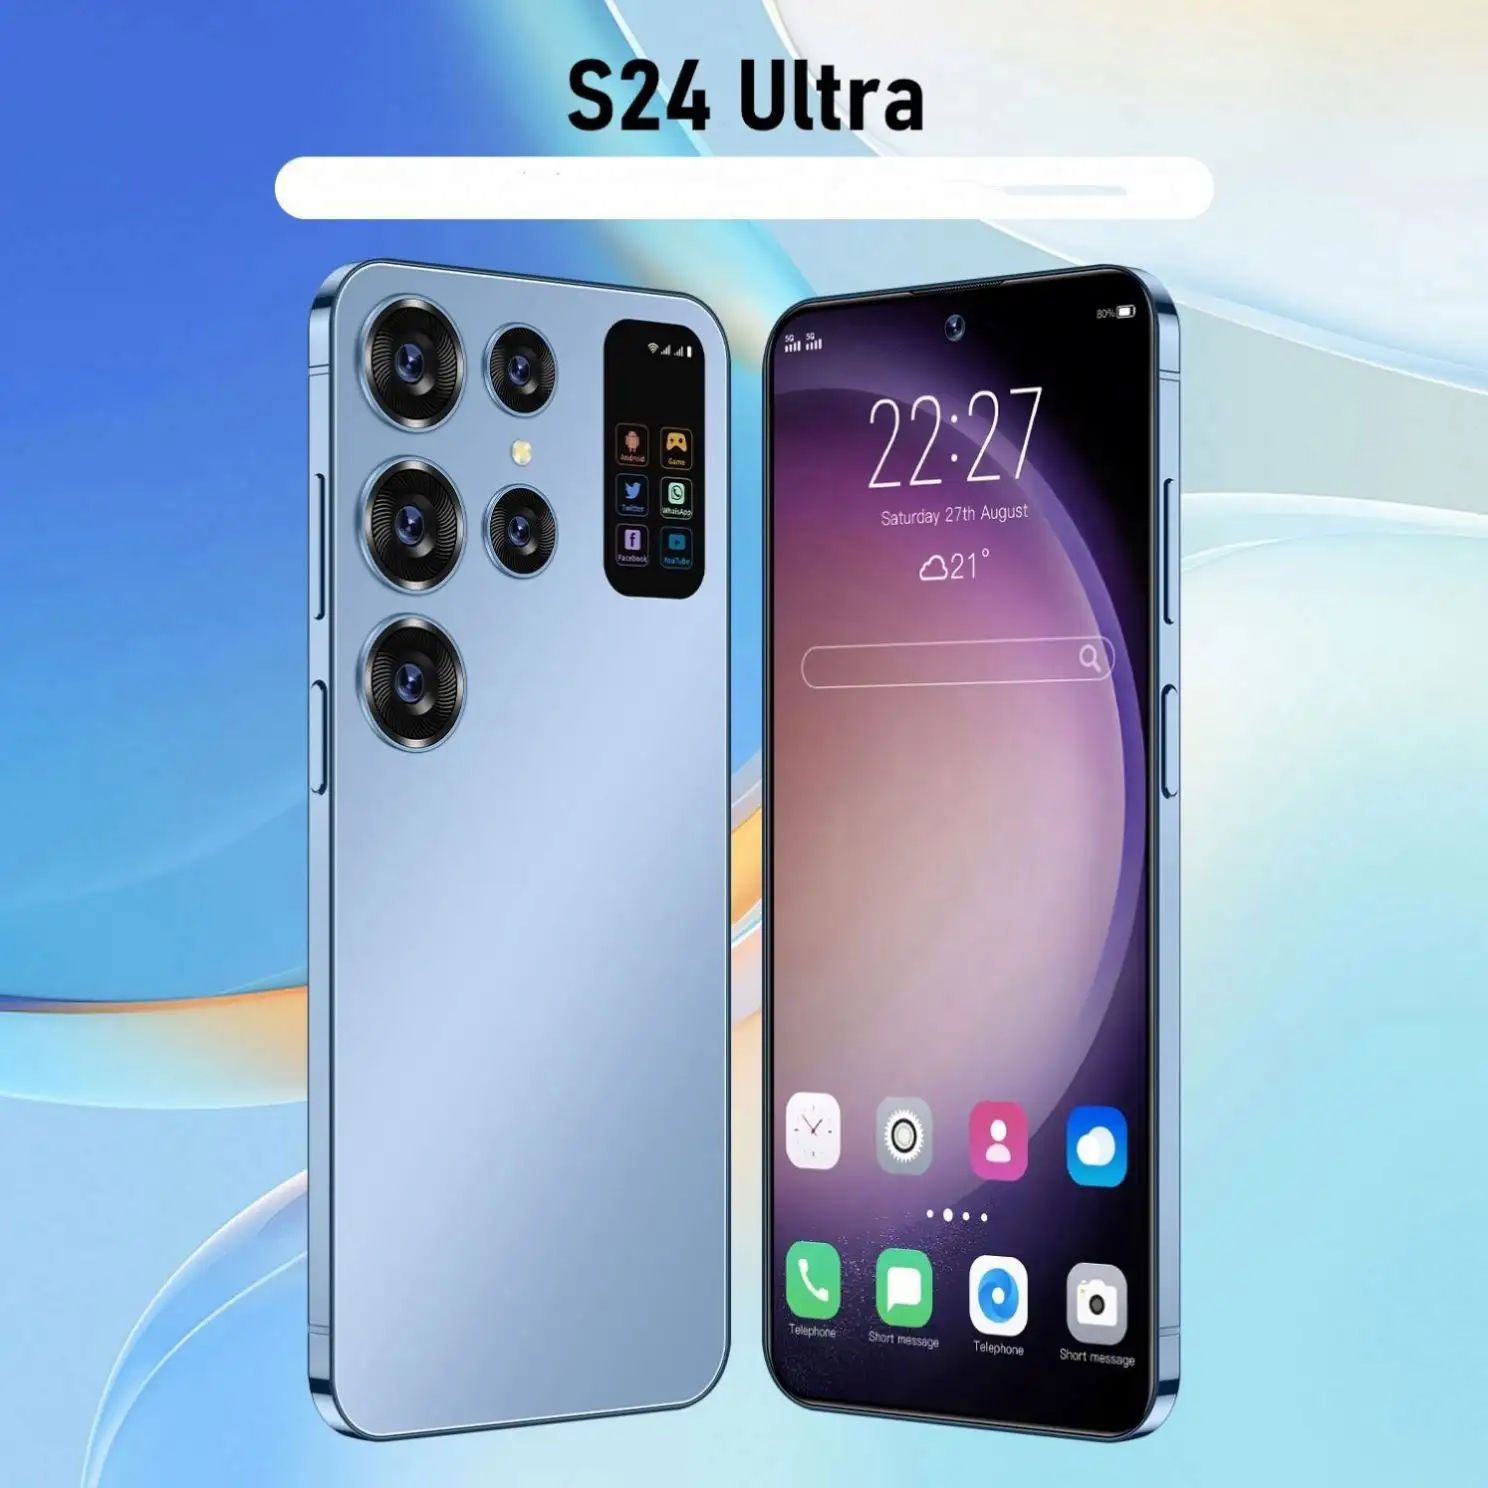 Teléfonos Inteligentes S24 Ultra Strong 10 Core Procesador Smartphone Precio Con Certificado Ce